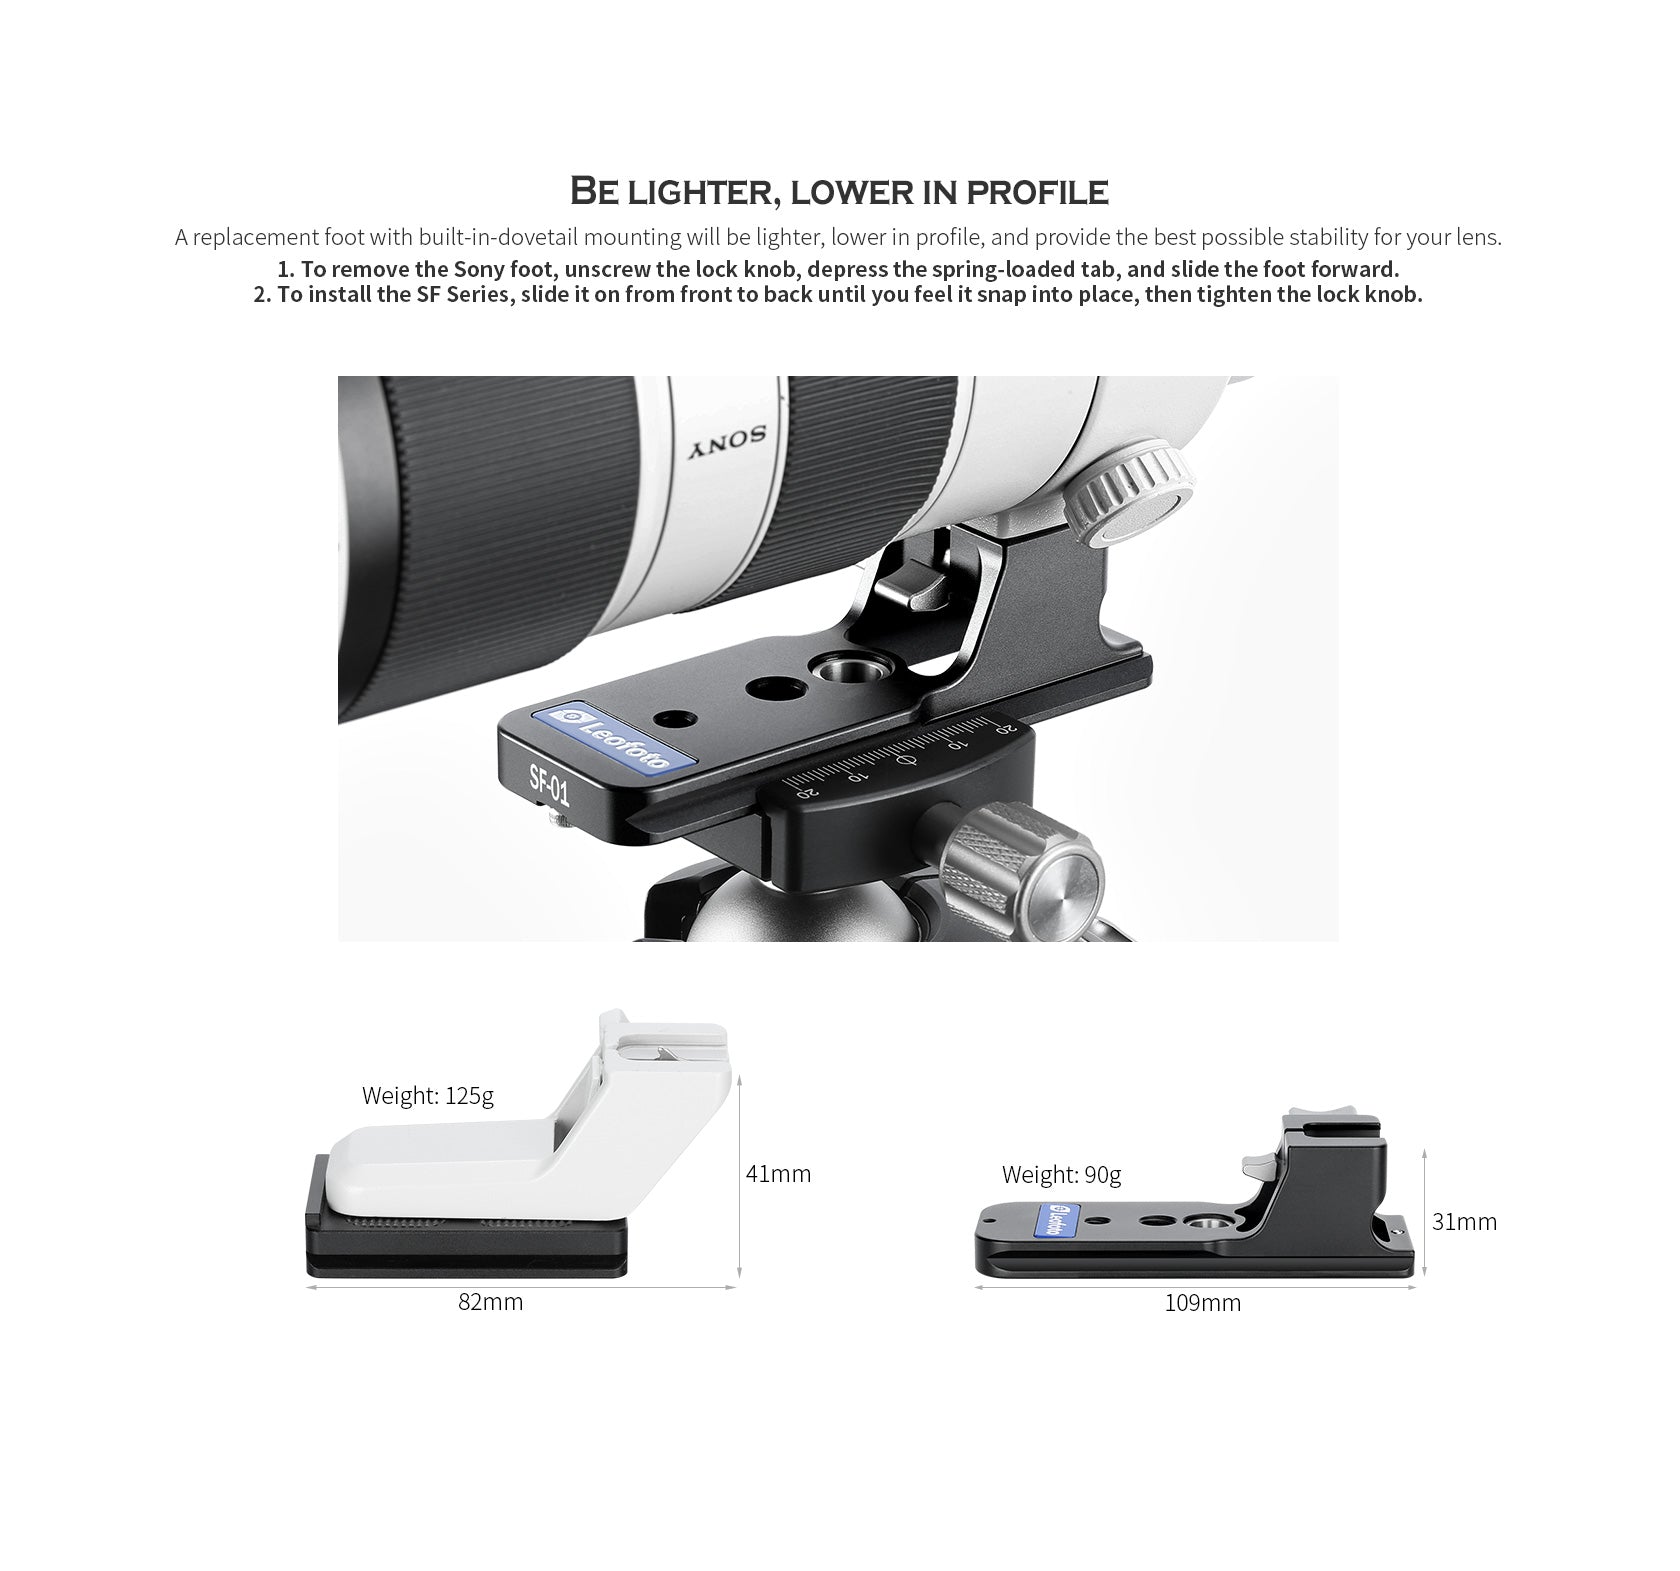 Leofoto SF-01 Replacement Lens Foot for SONY FE 70-200mm F/2.8 GM I&II, FE 100-400mm F/4.5-5.6 GM & FE 300mm F2.8 GM